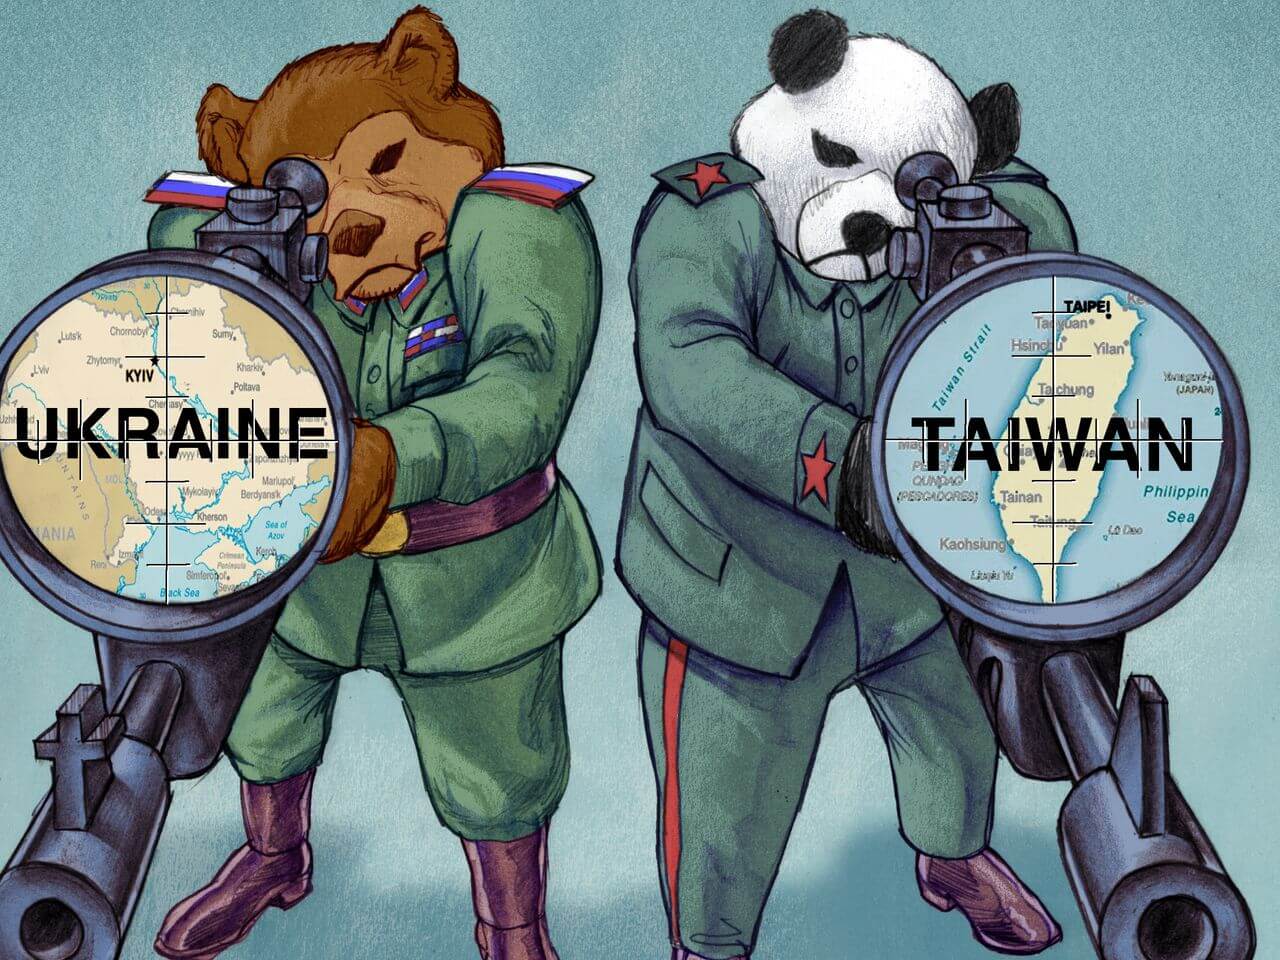 Ukraine and Taiwan